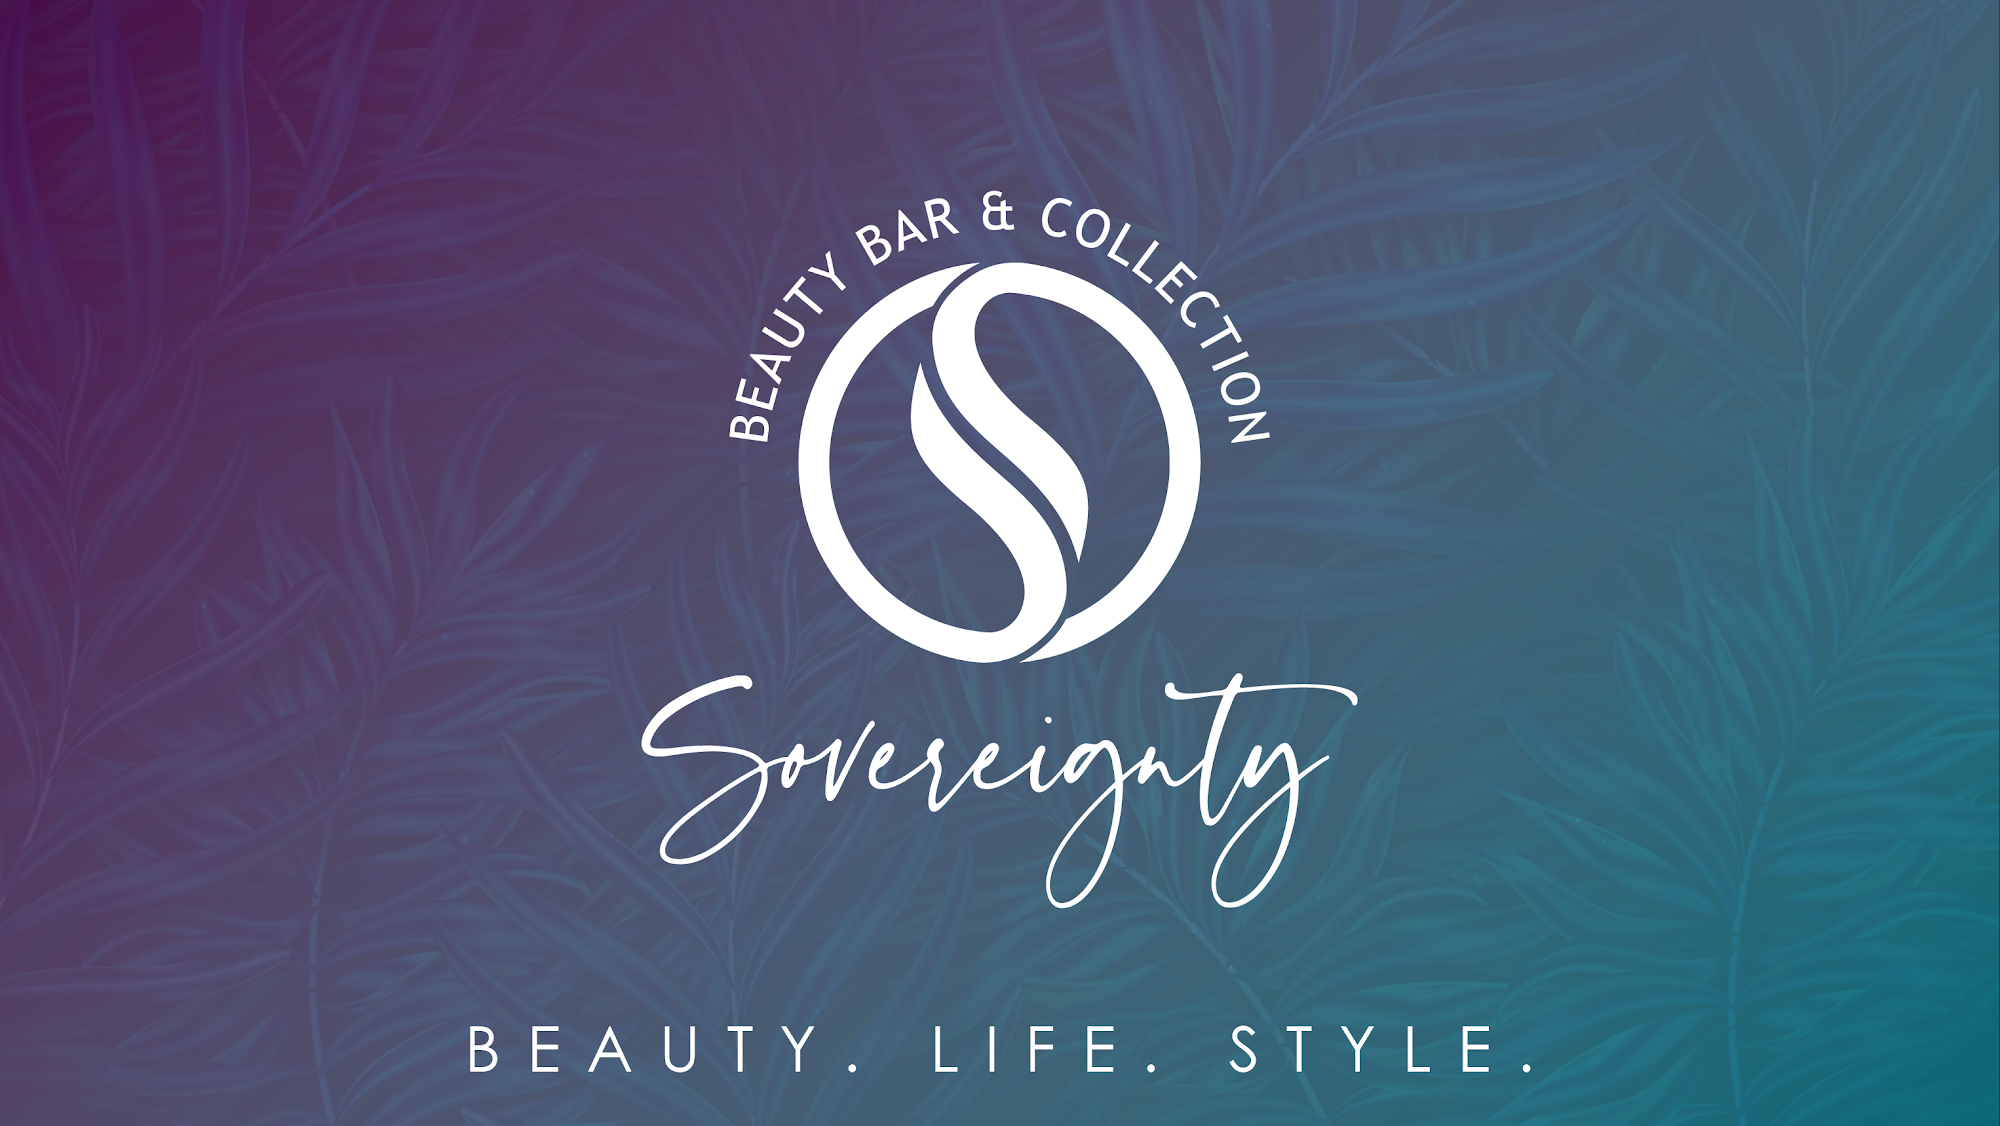 Sovereignty Beauty & Wellness Bar